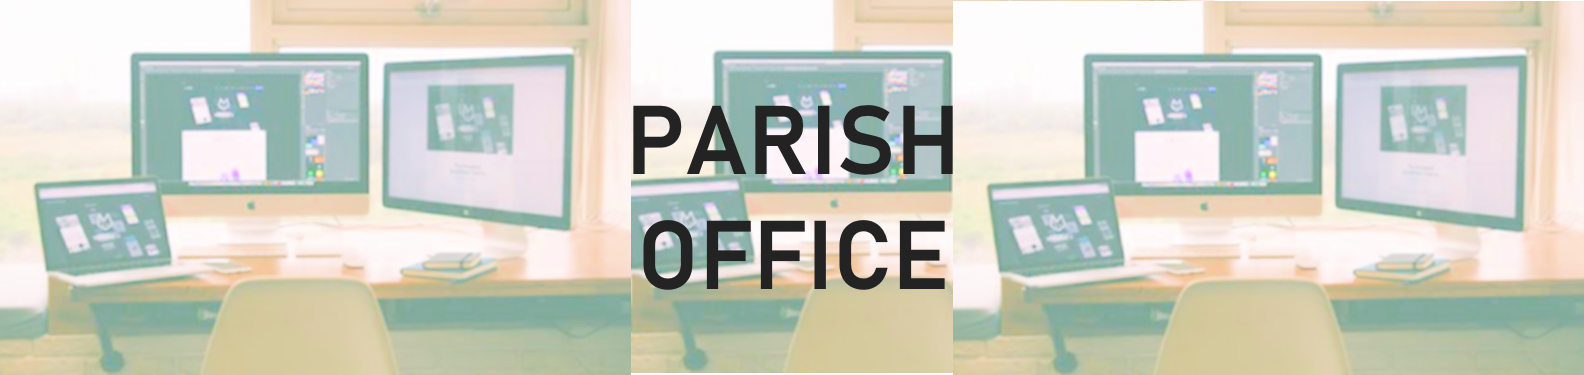 Parish Office Banner